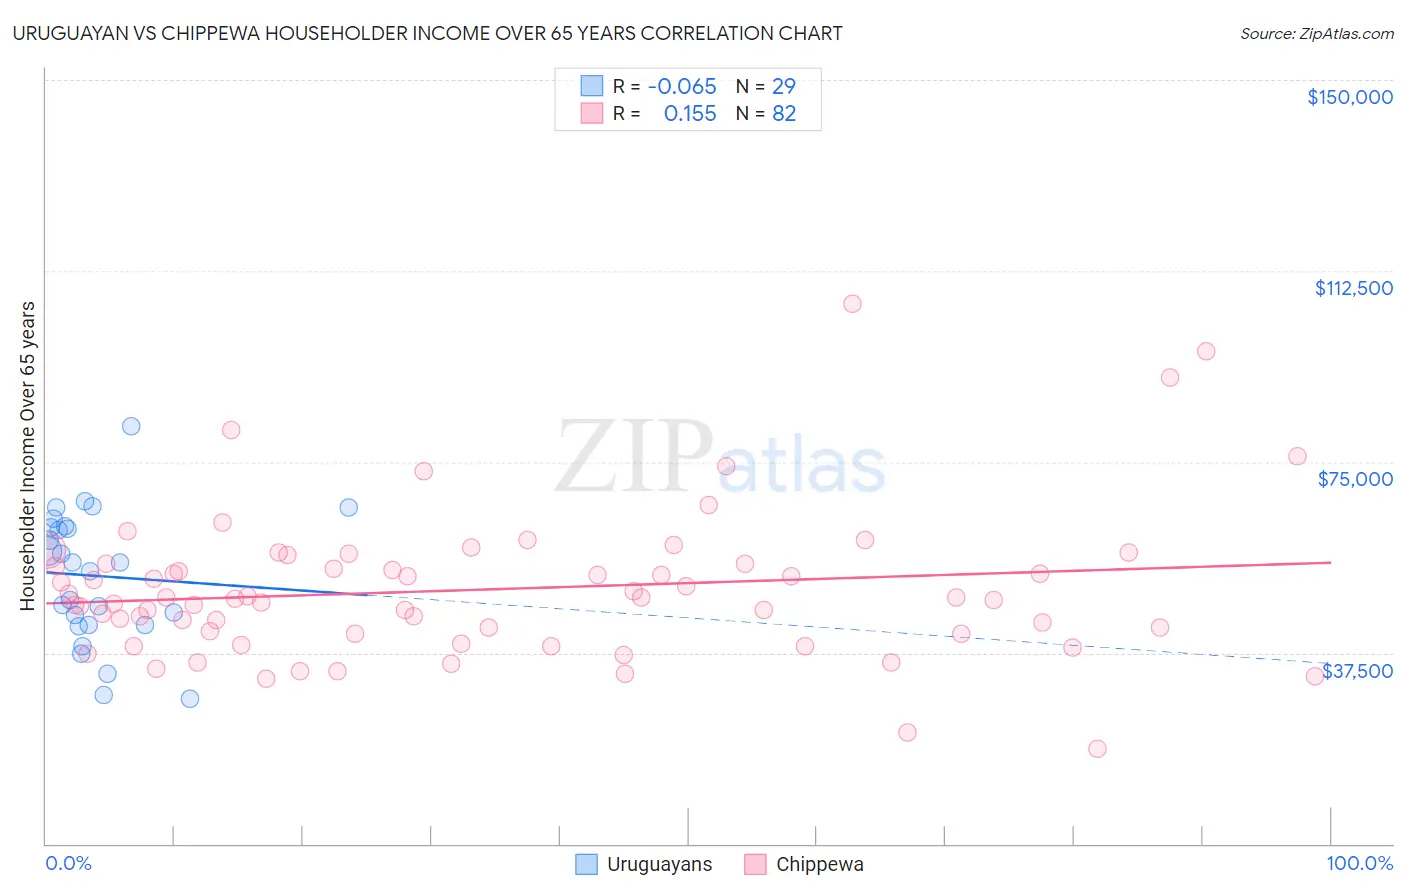 Uruguayan vs Chippewa Householder Income Over 65 years